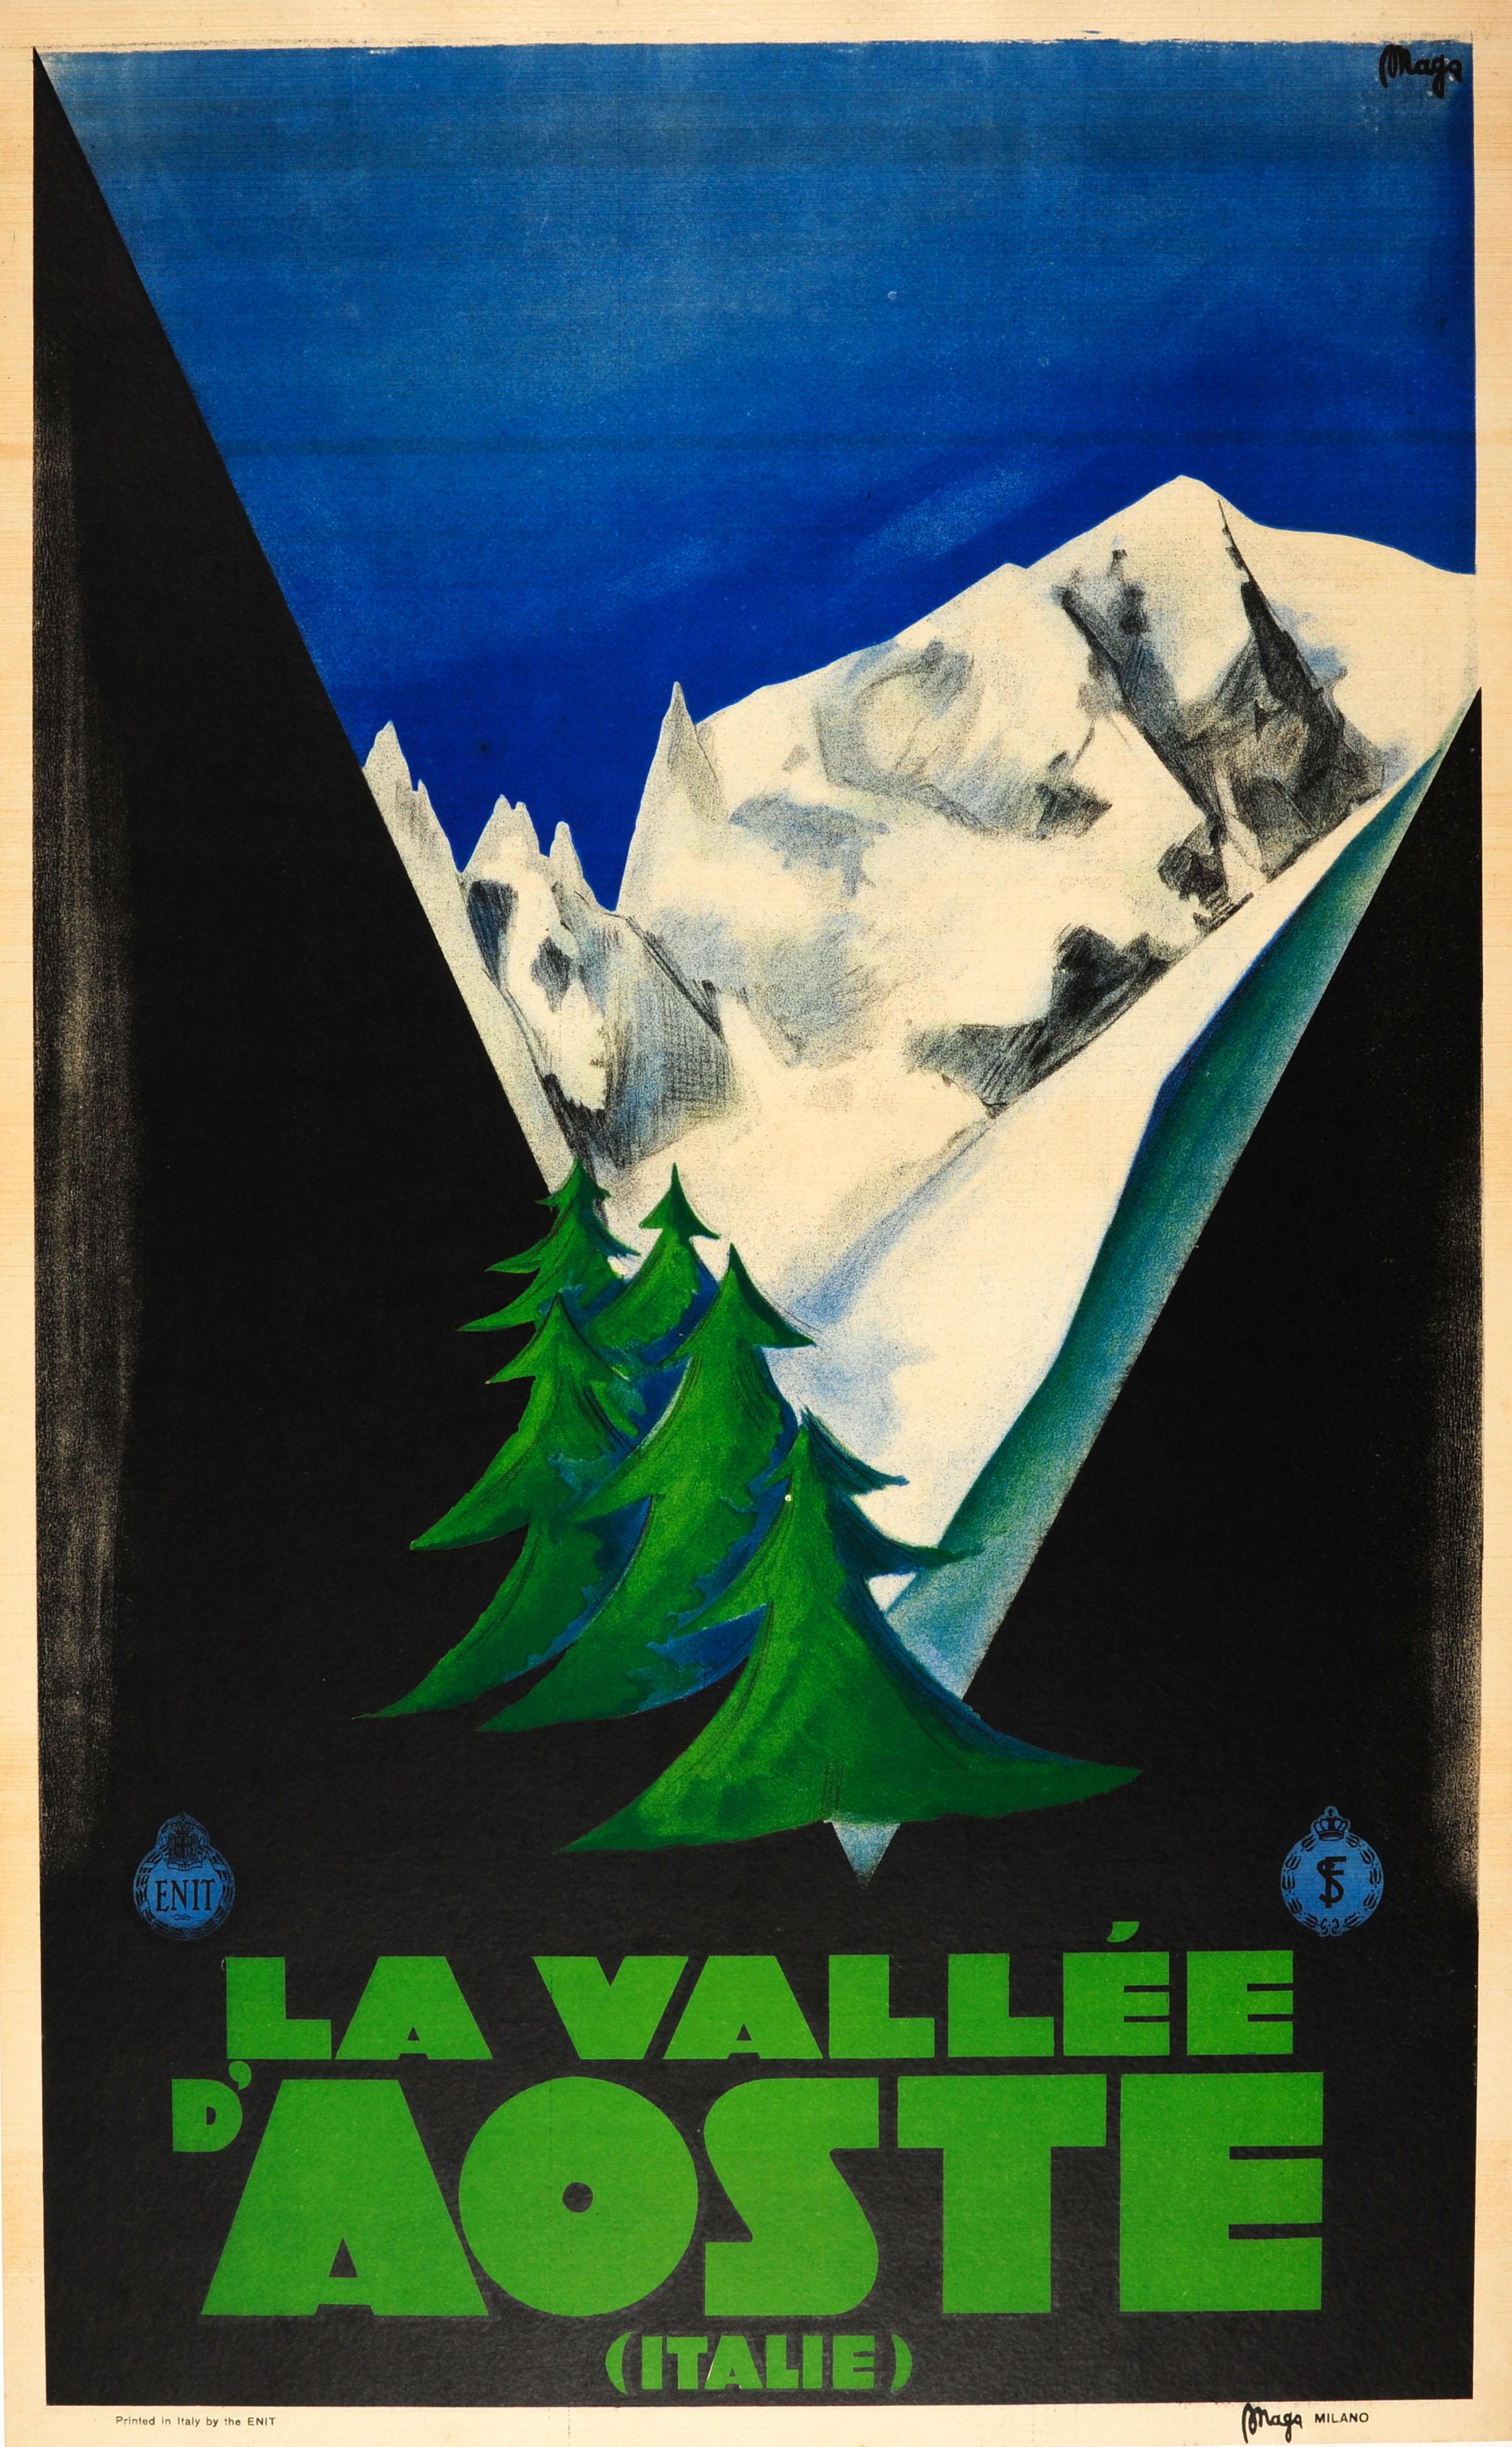 Giuseppe Magagnoli Print - Original Vintage ENIT Travel Poster For The Aosta Valley Italy La Vallee d'Aoste